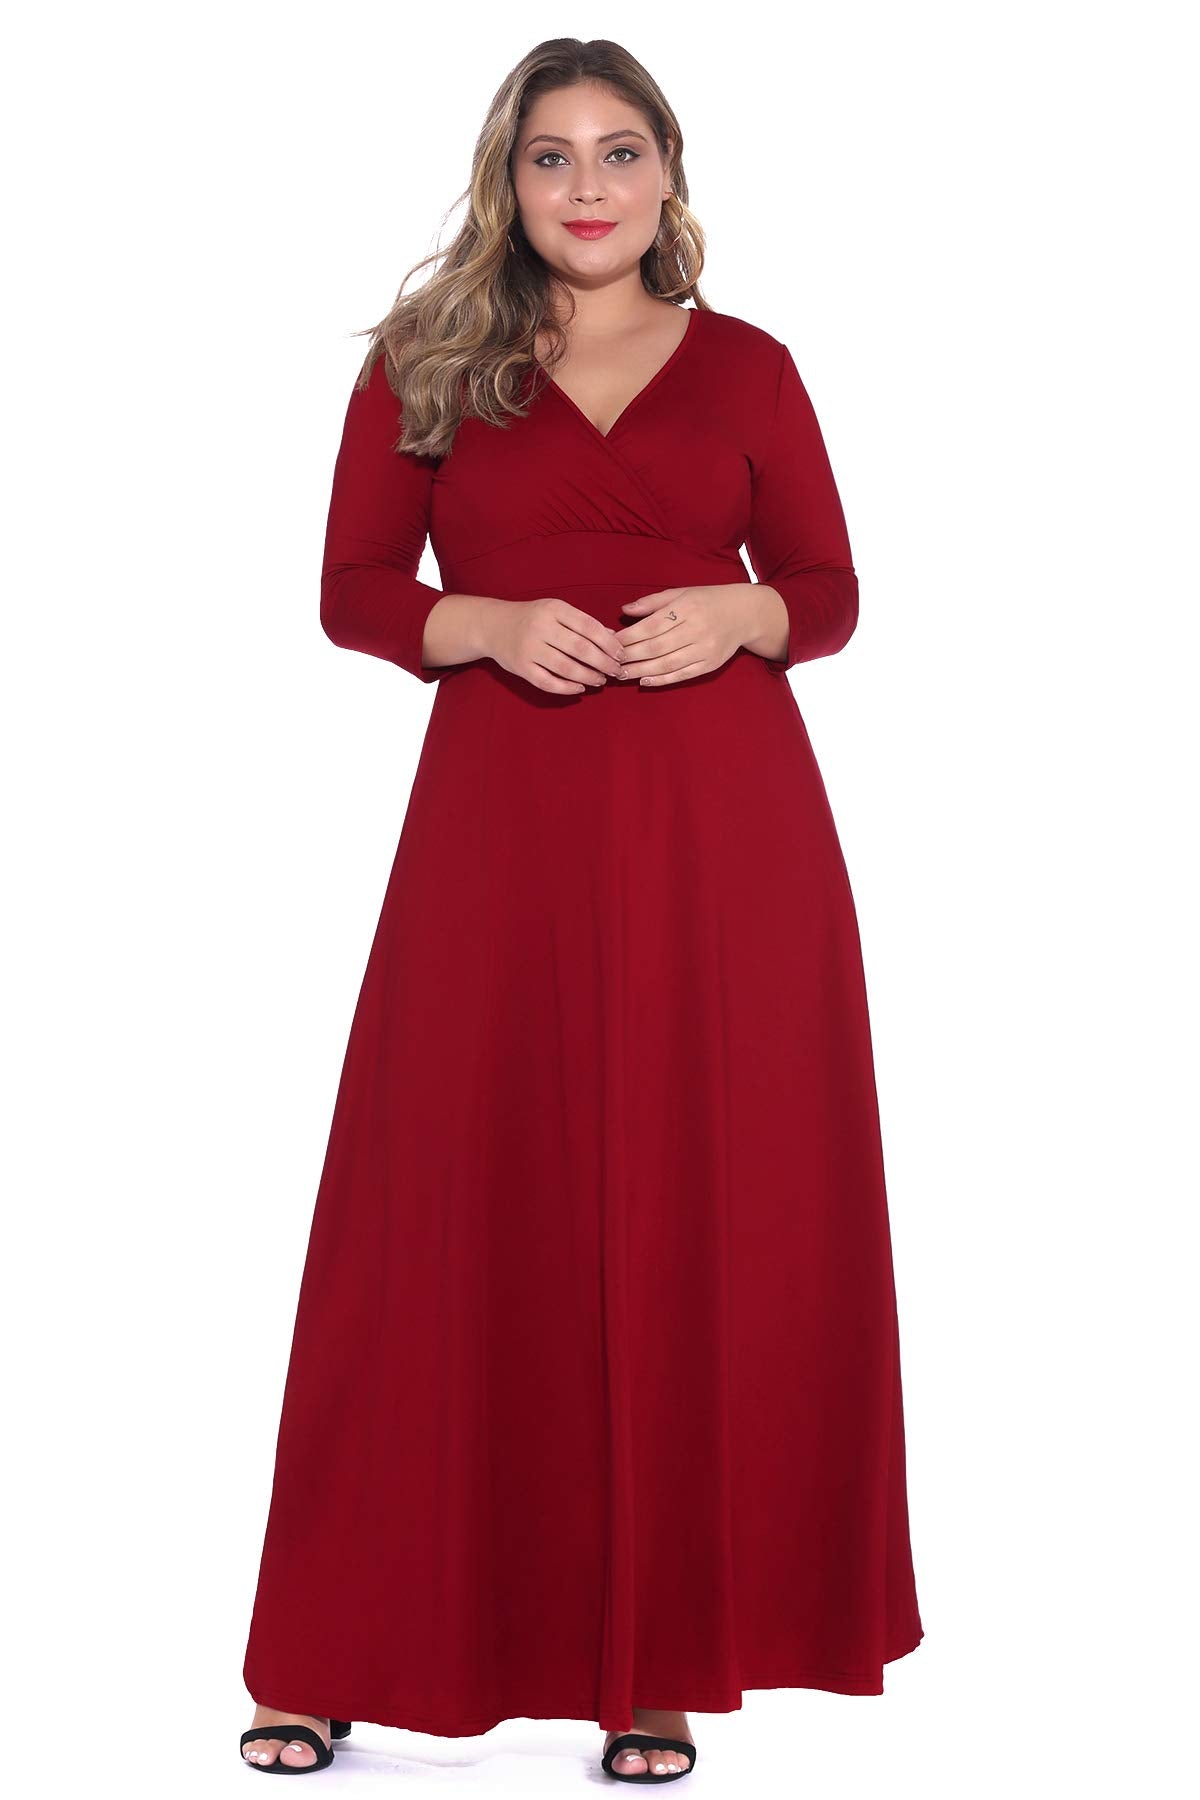 Women's Solid Autumn Warm Gowns Maxi Dress